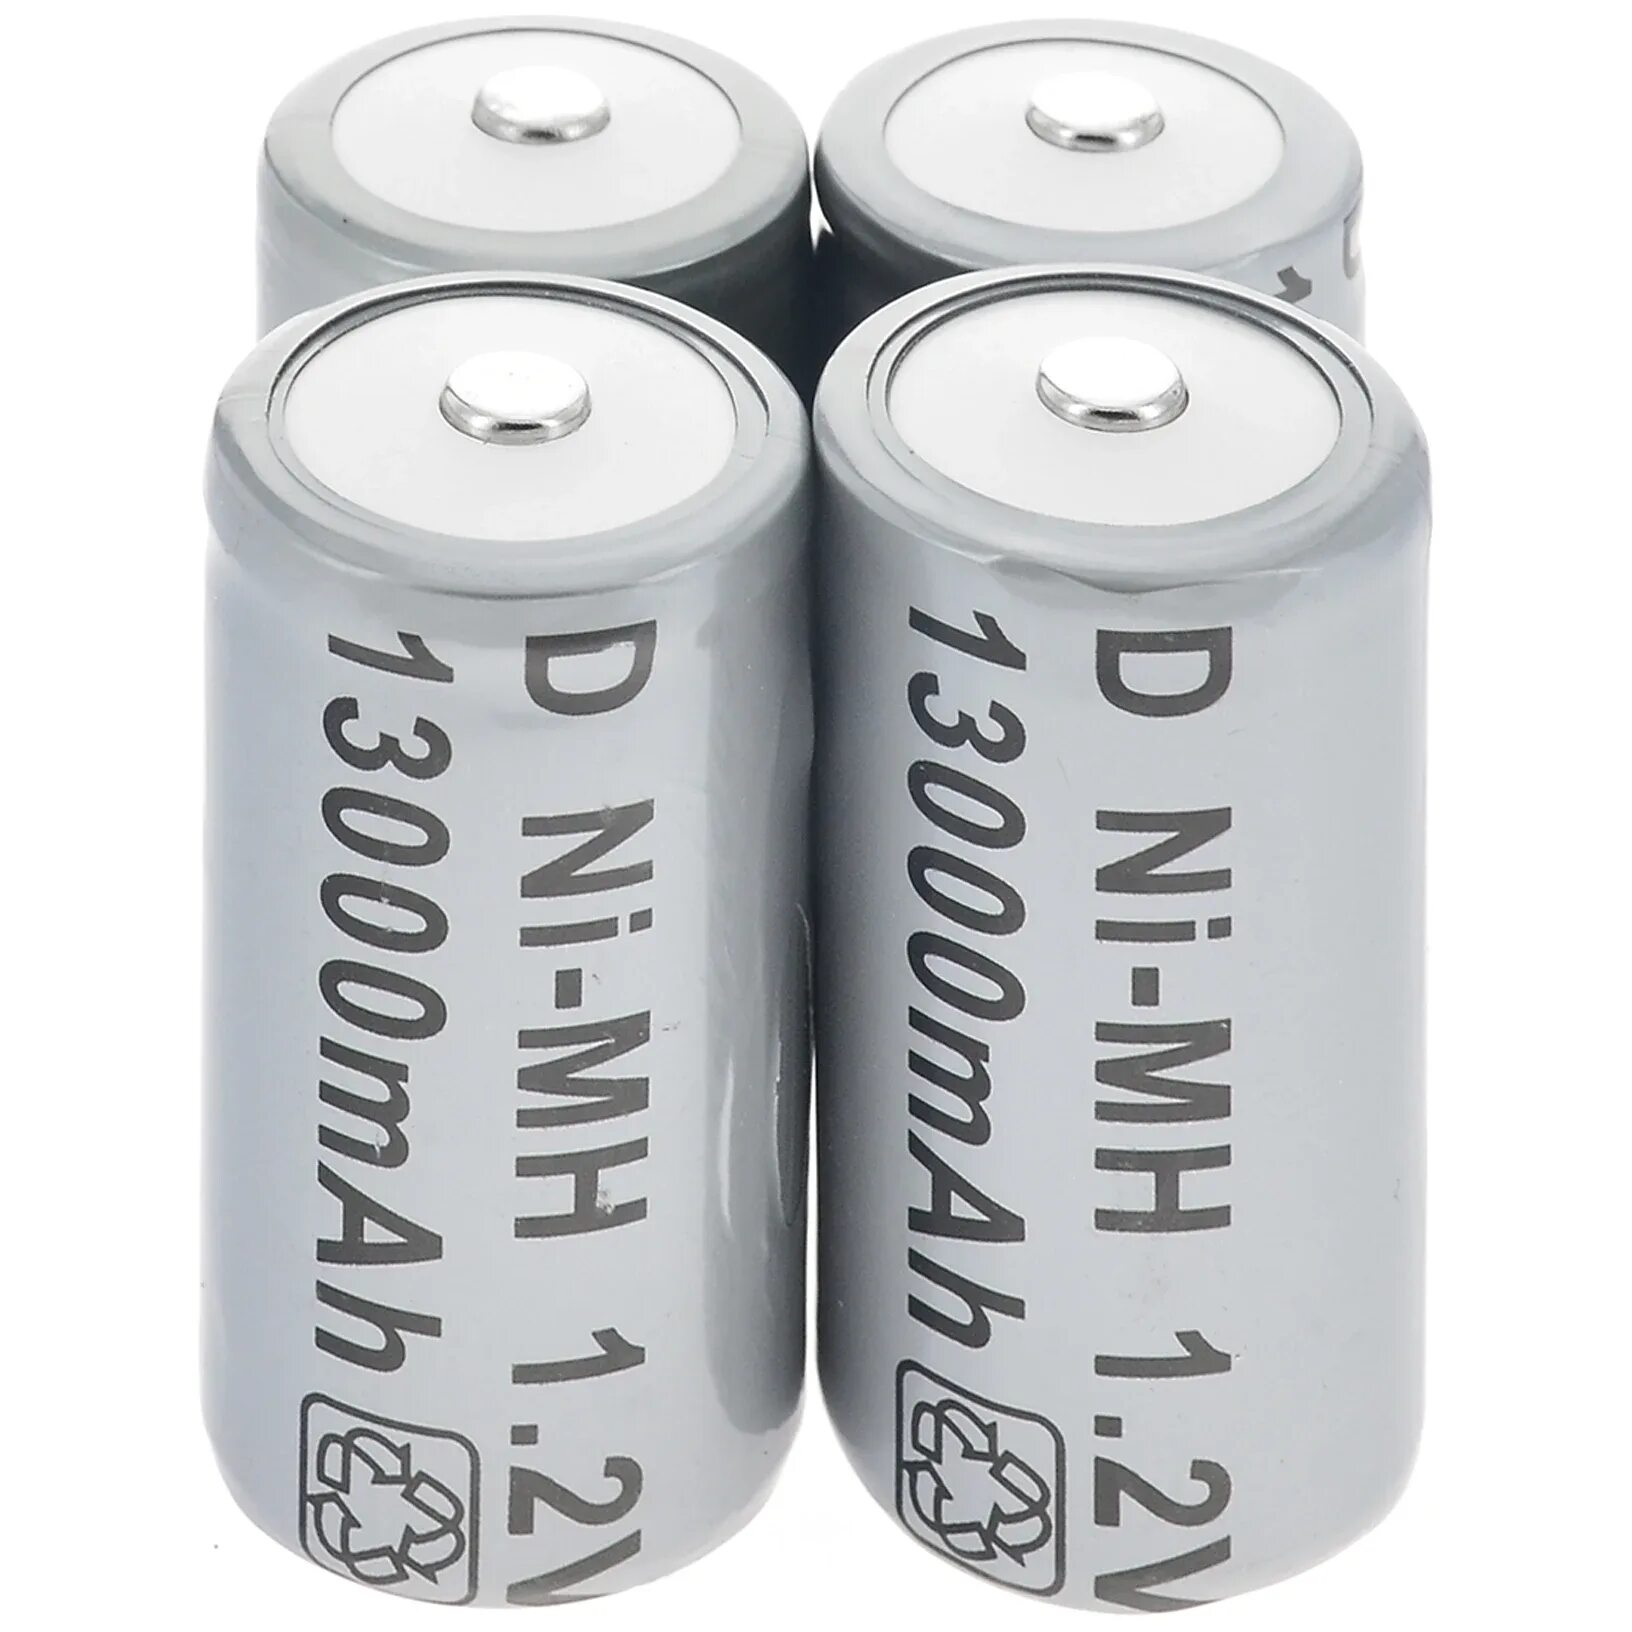 Battery type. Батареи никель металлогидридные 1.2v 3000mah. Батарейка аккумуляторная d2. Никель-металлогидридный аккумулятор. Никель-металлогидридный аккумулятор АА.